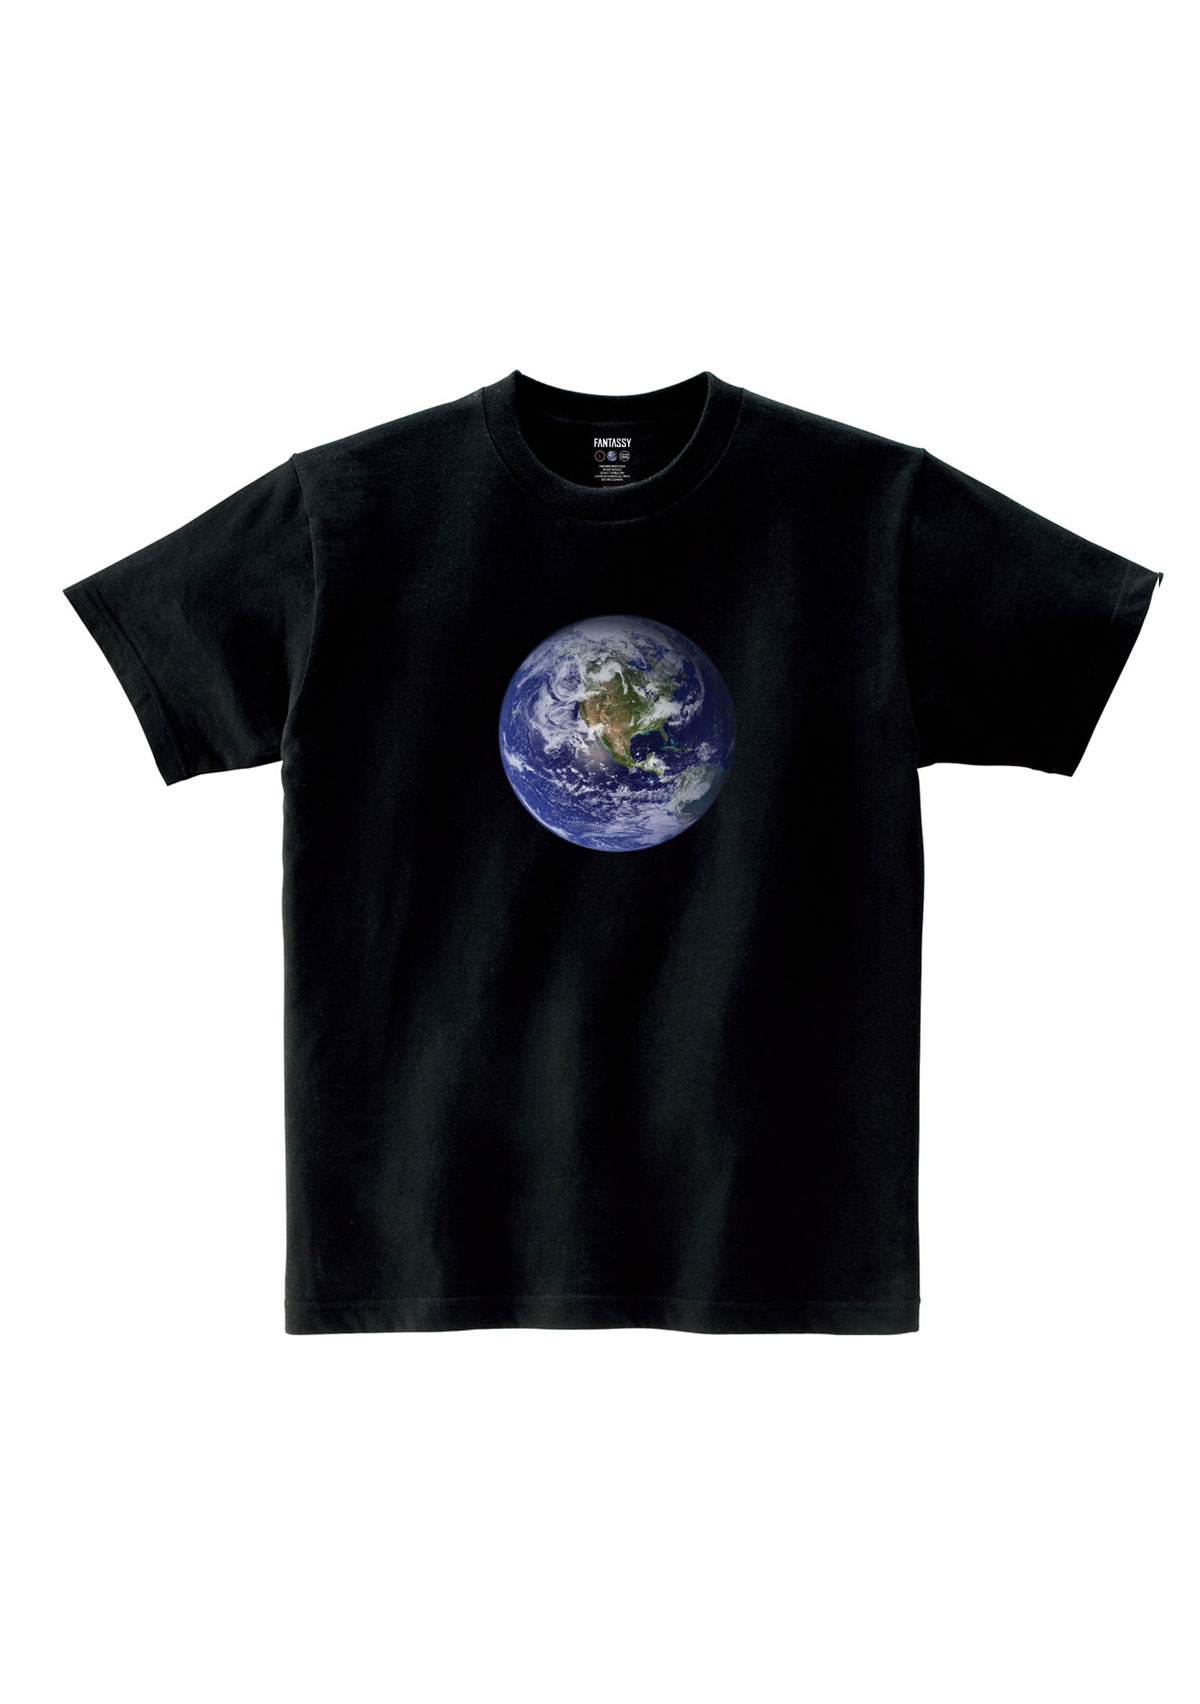 FANTASSY Earth T-Shirt (Black)